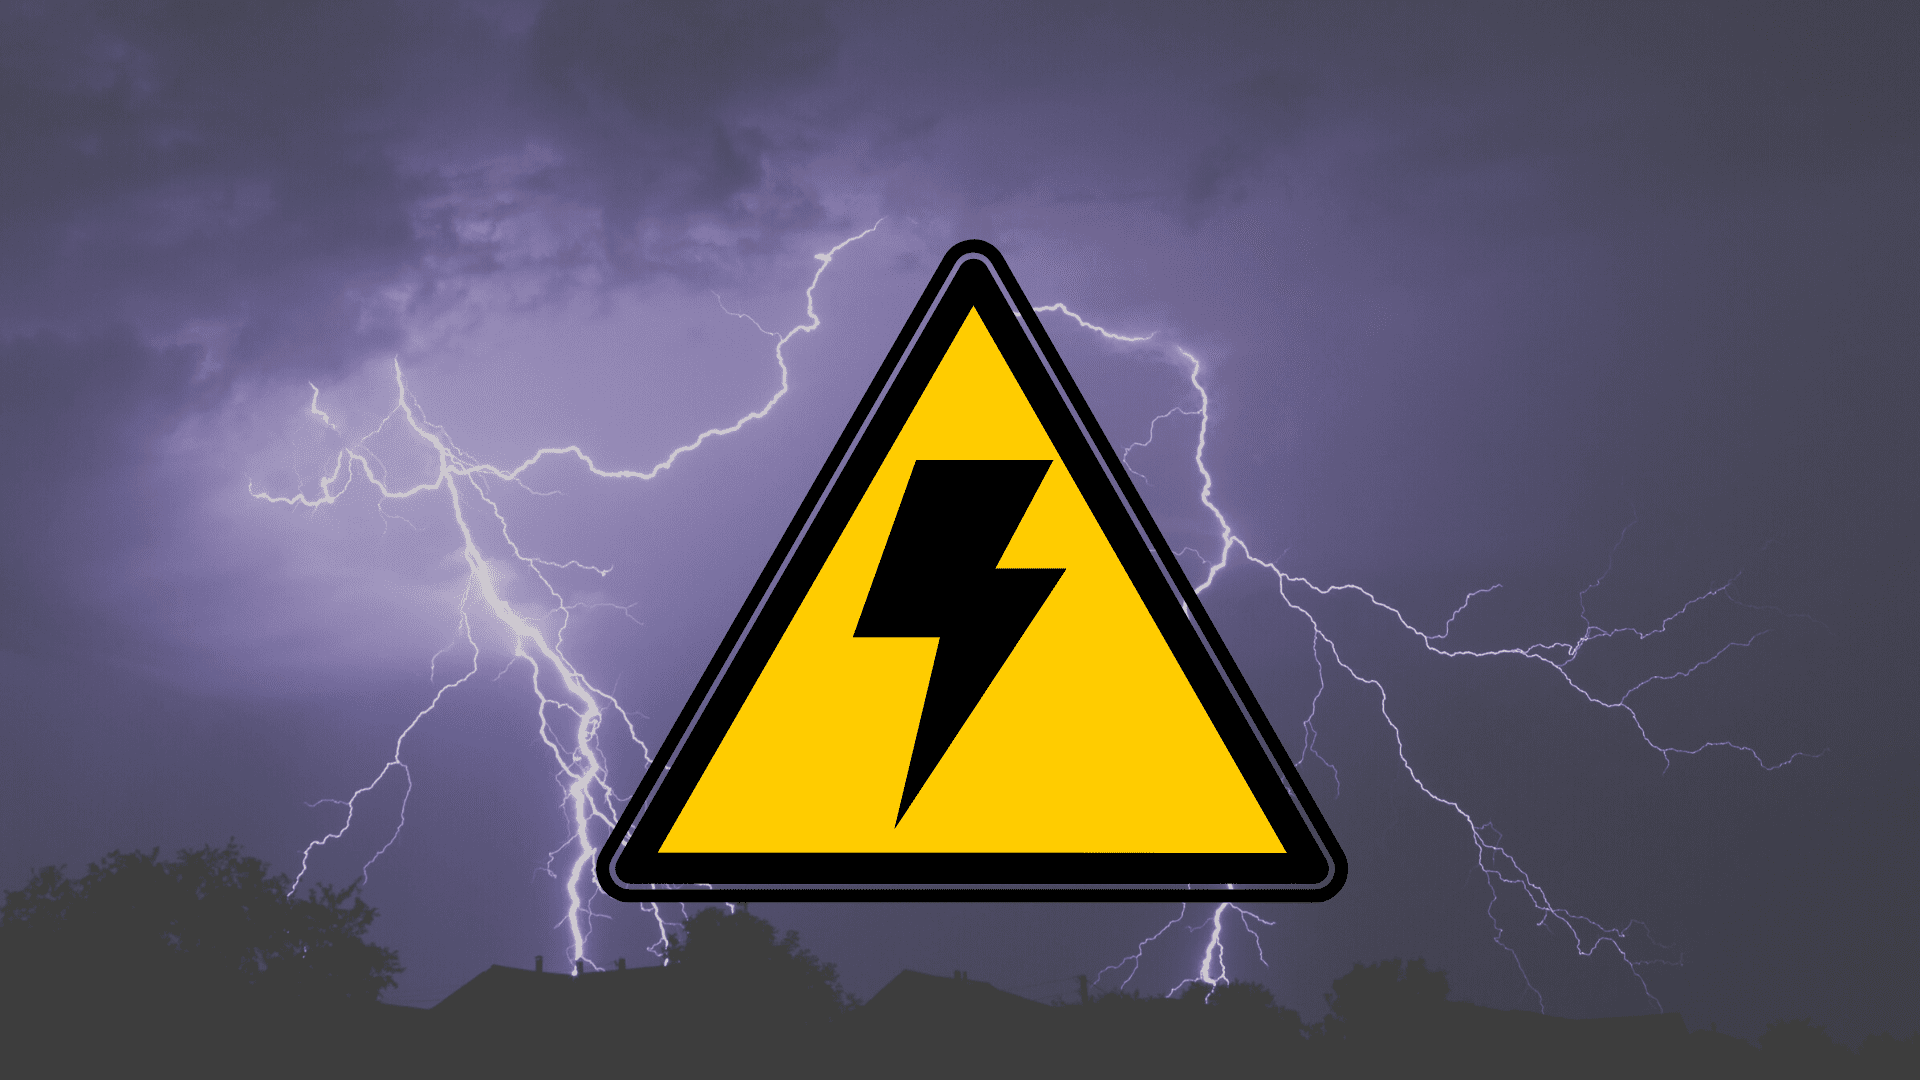 Lightning Safety Warning